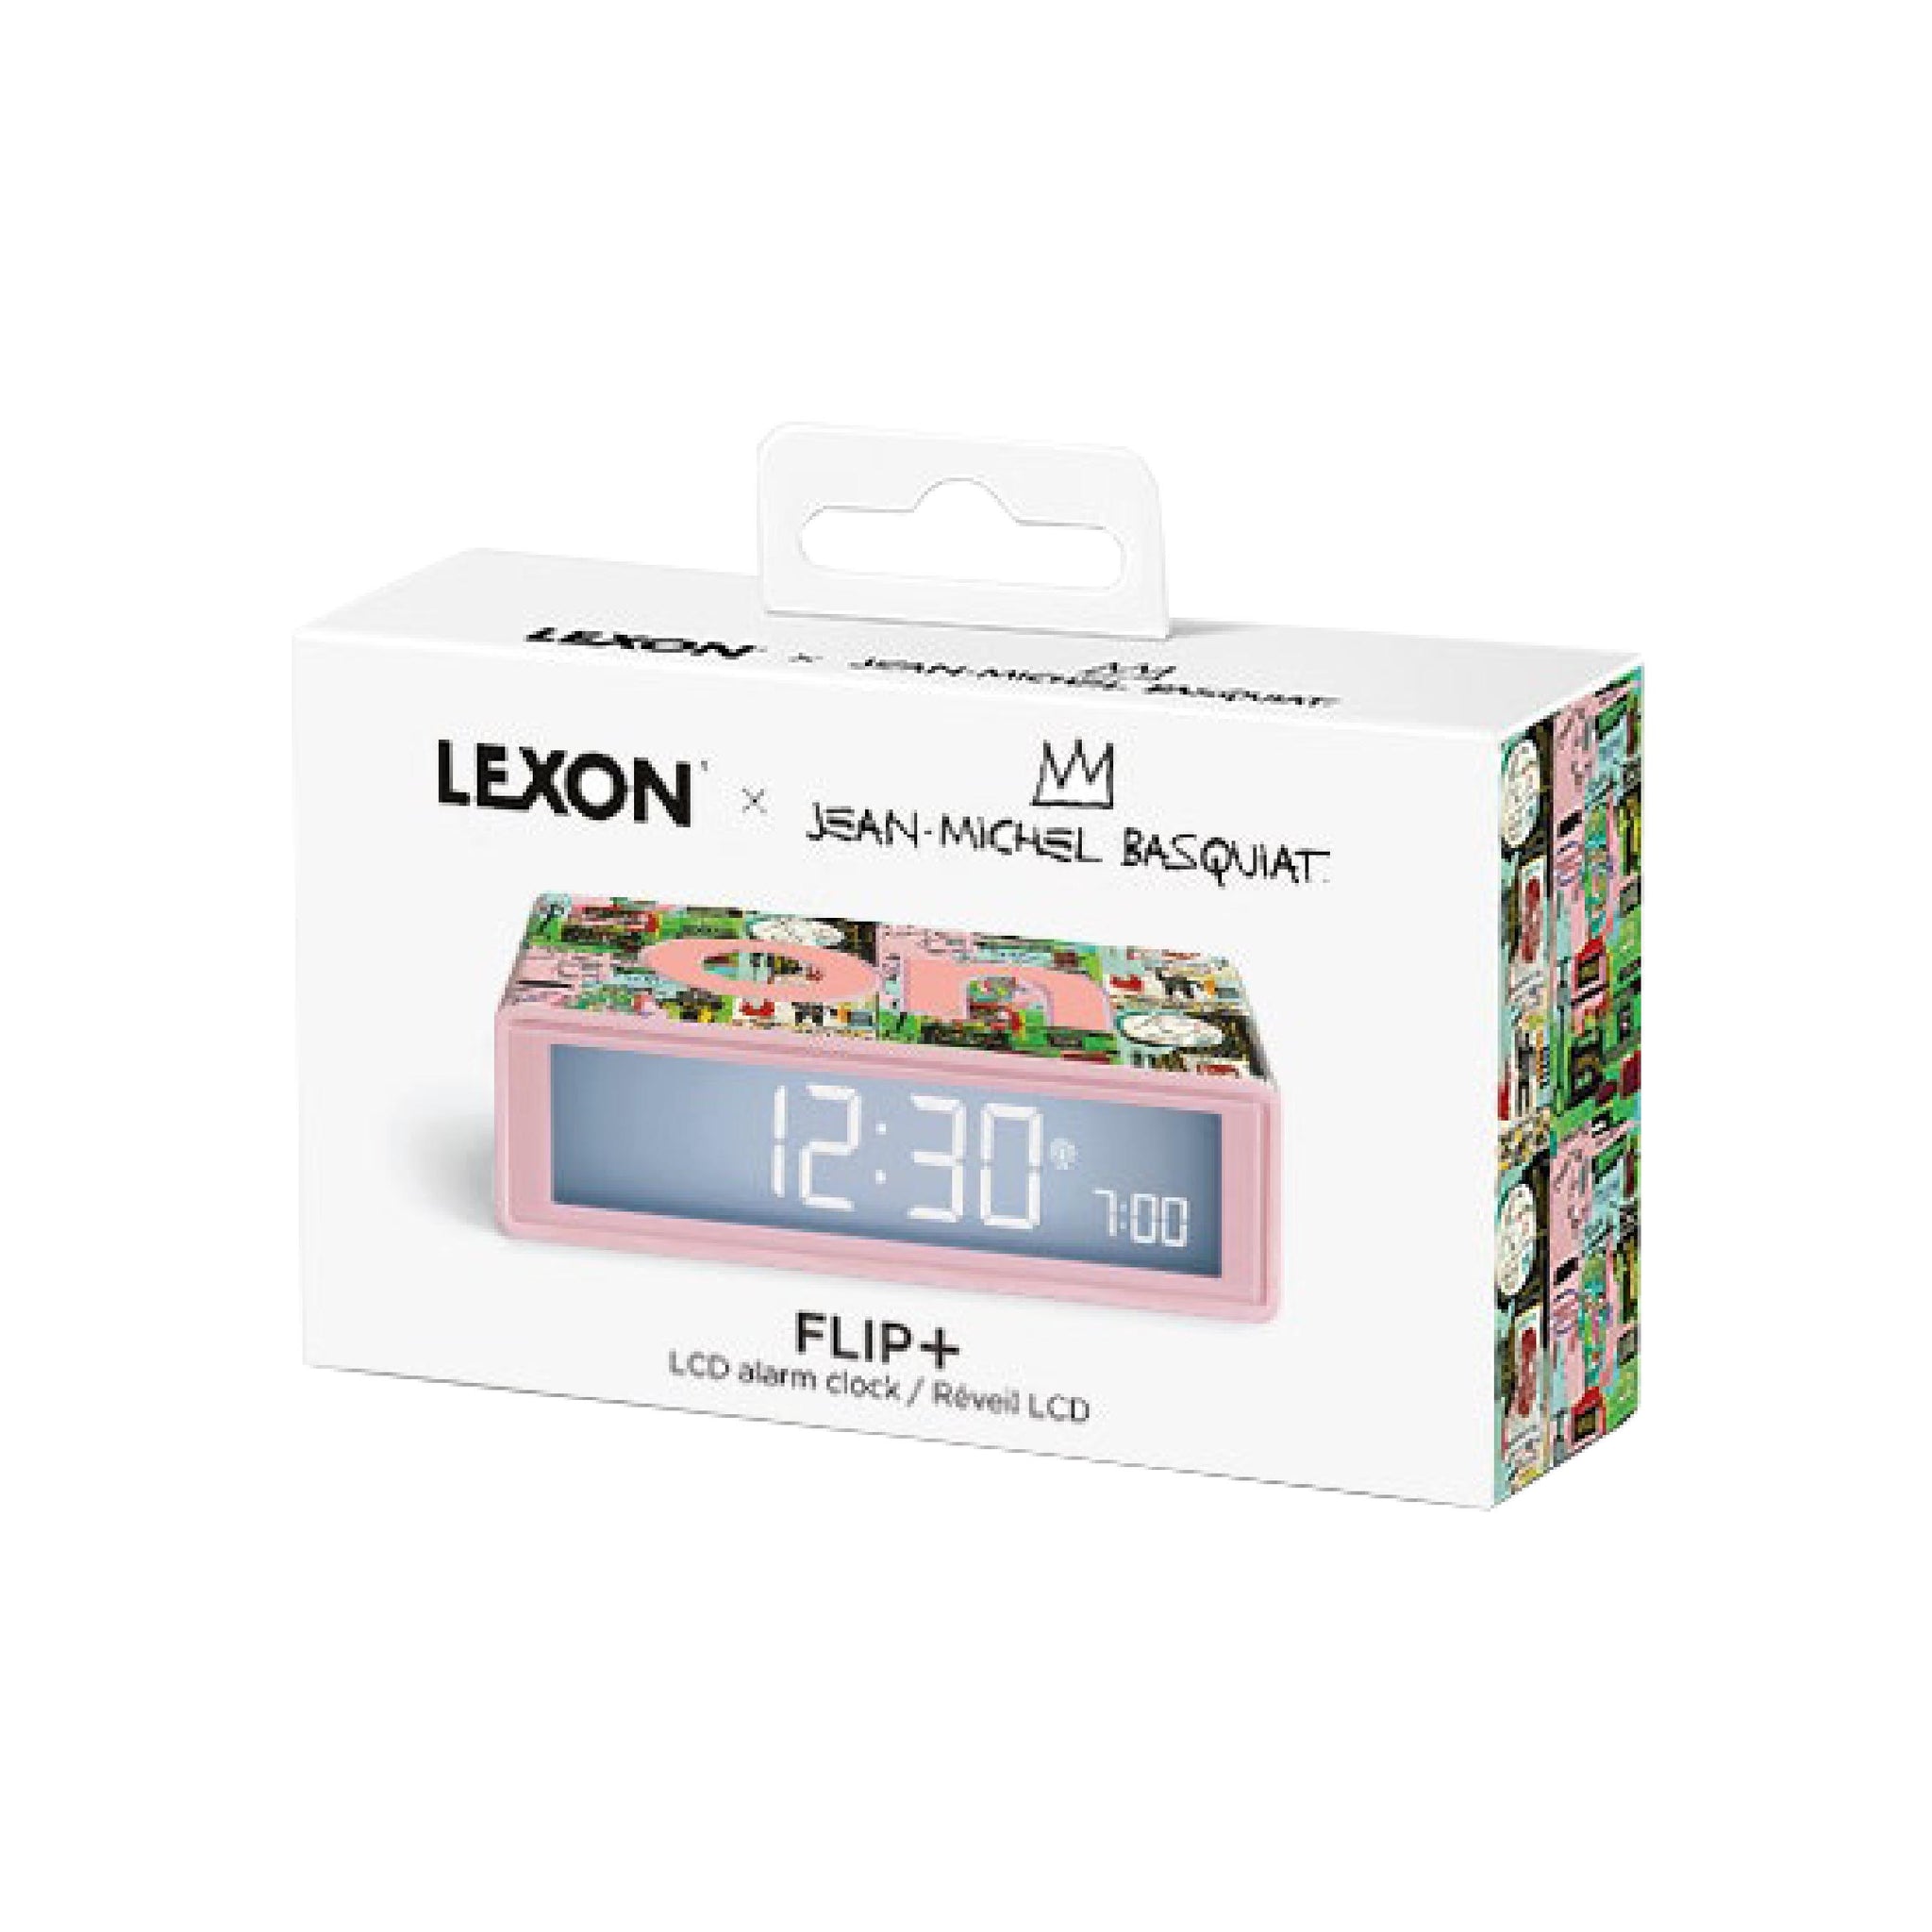 Flip+ Alarm Clock - Lexon x Jean-Michel Basquiat In Italian